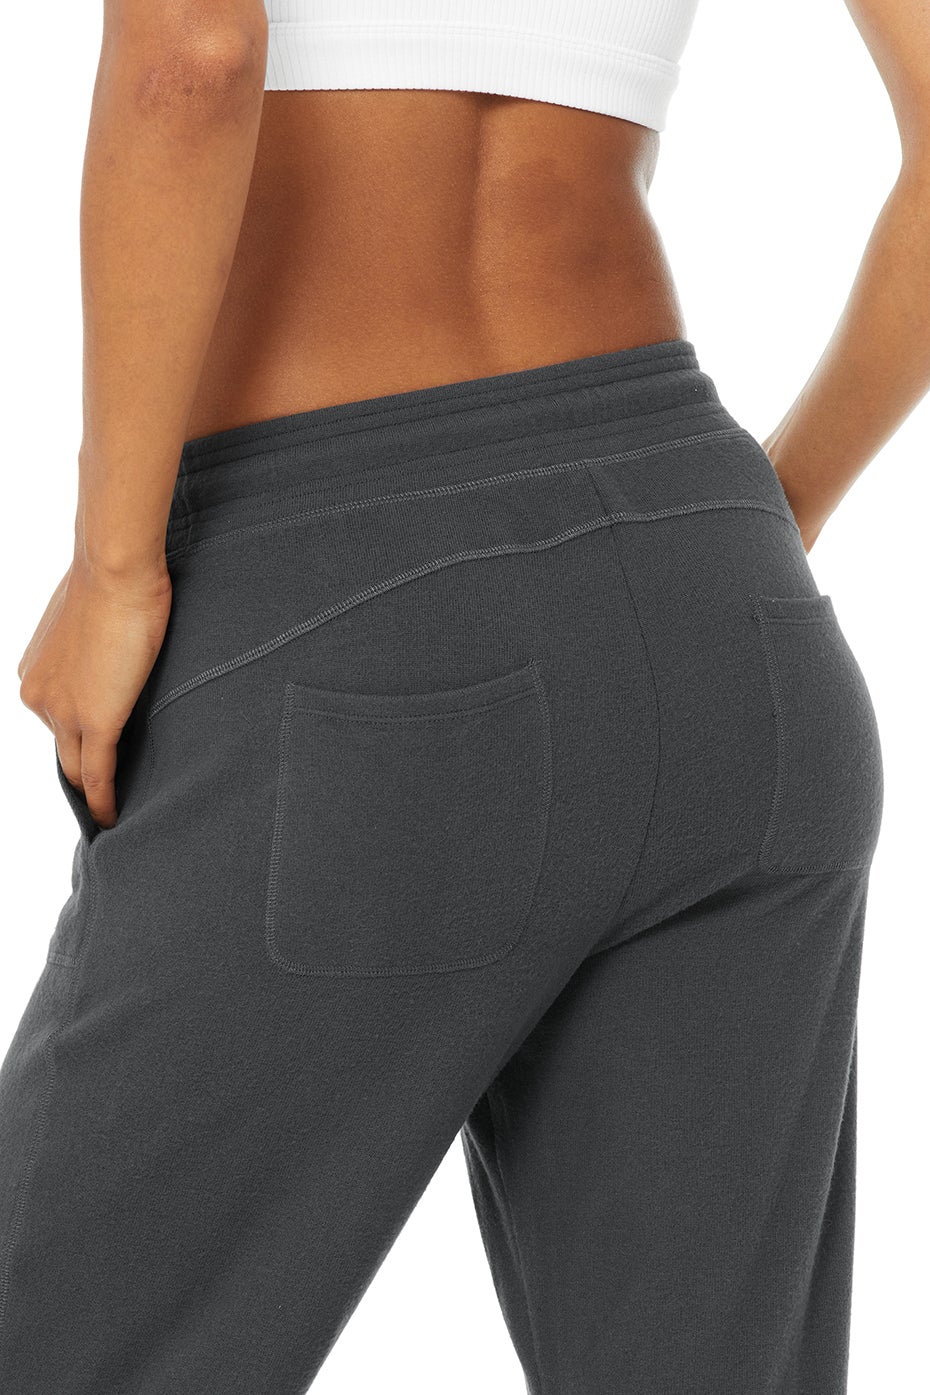 Alo Yoga Women's Sweatpants, Anthracite, Small 